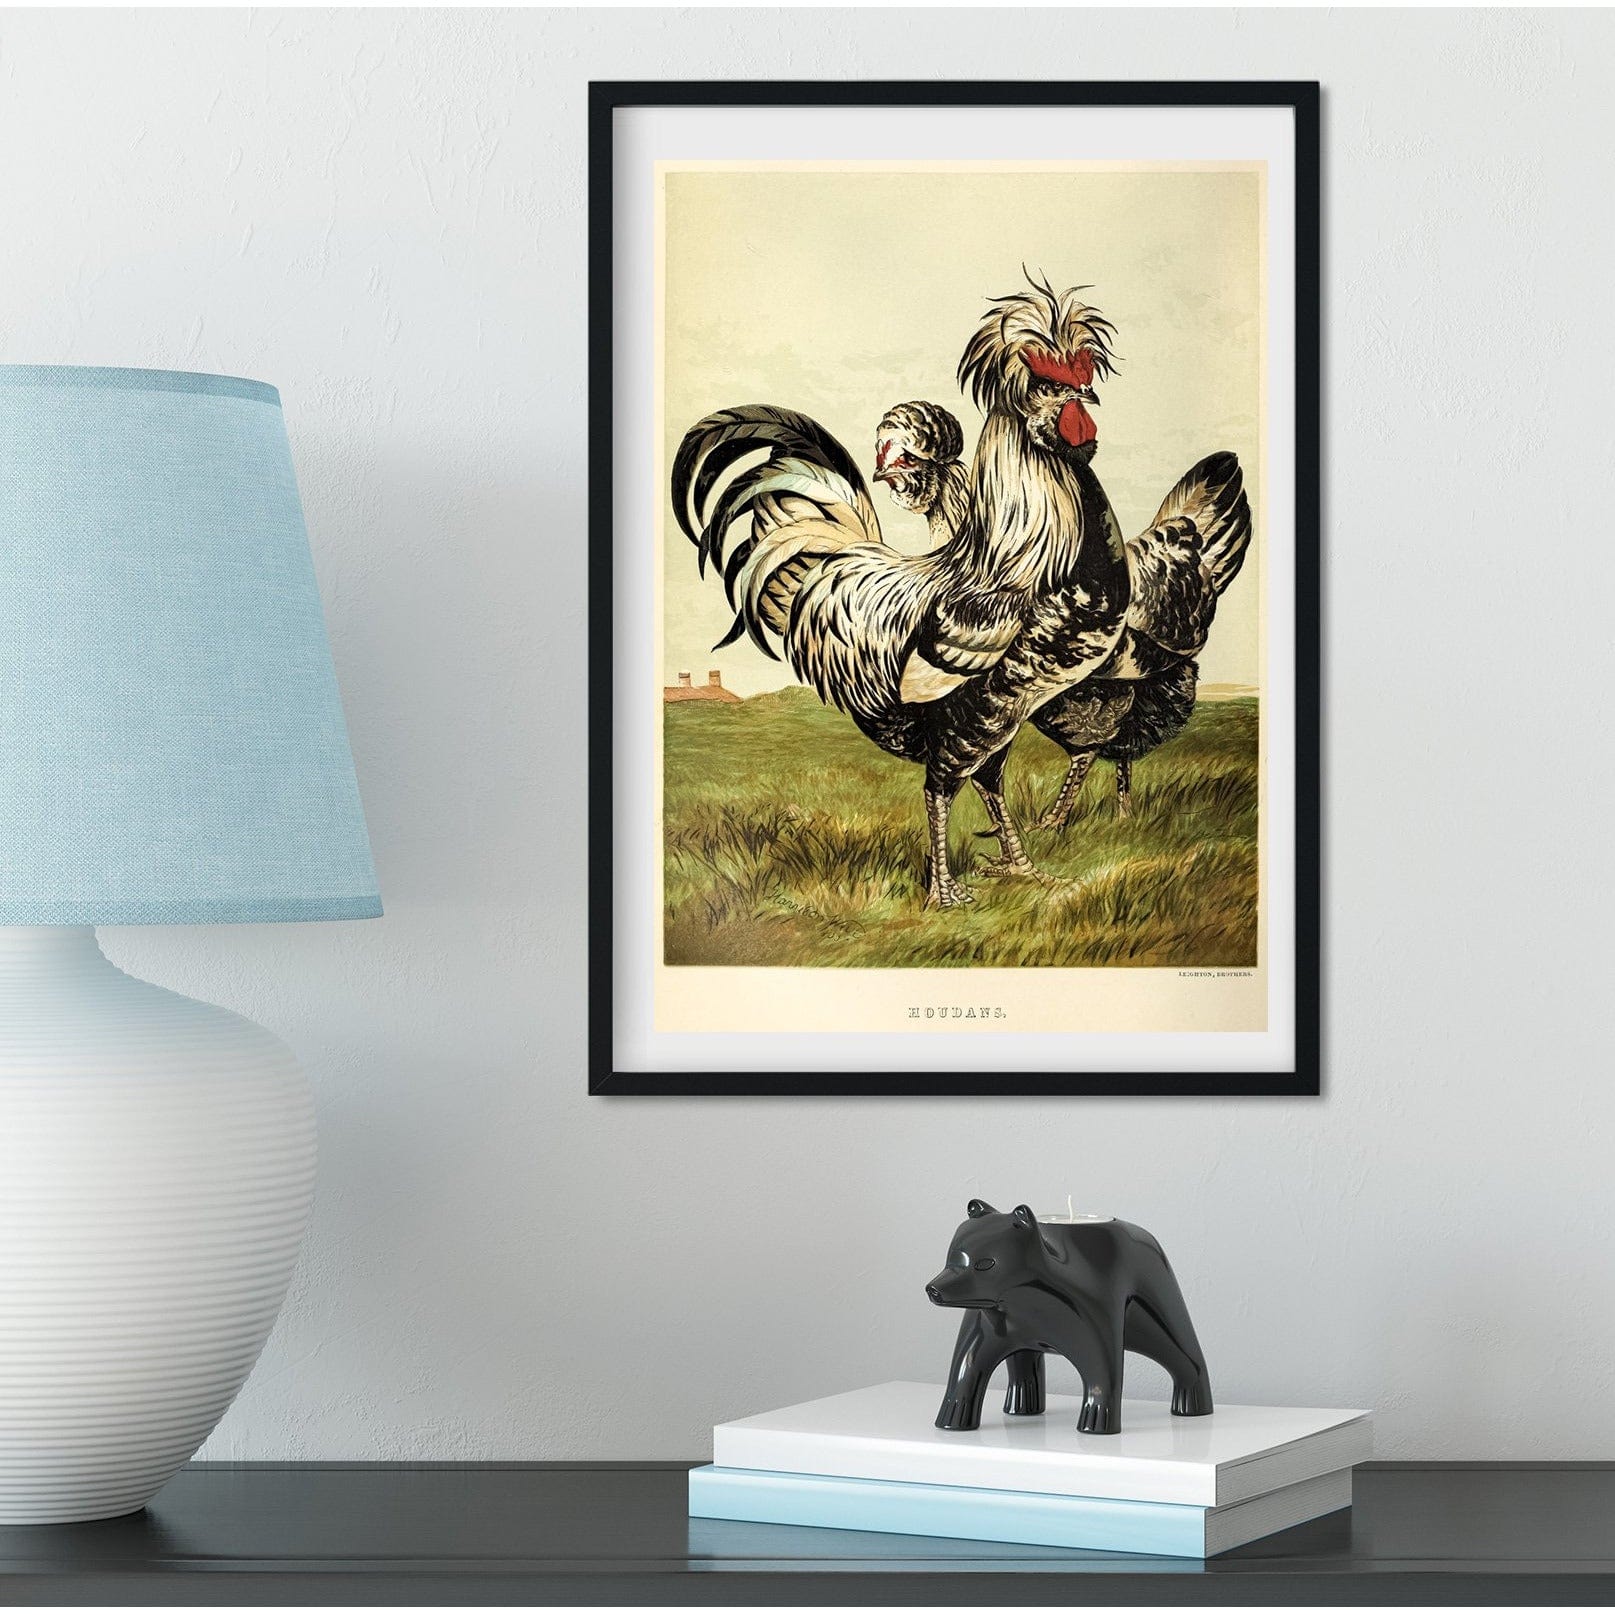 Antique chicken print, Houdans vintage bird prints Vintage Animal Prints